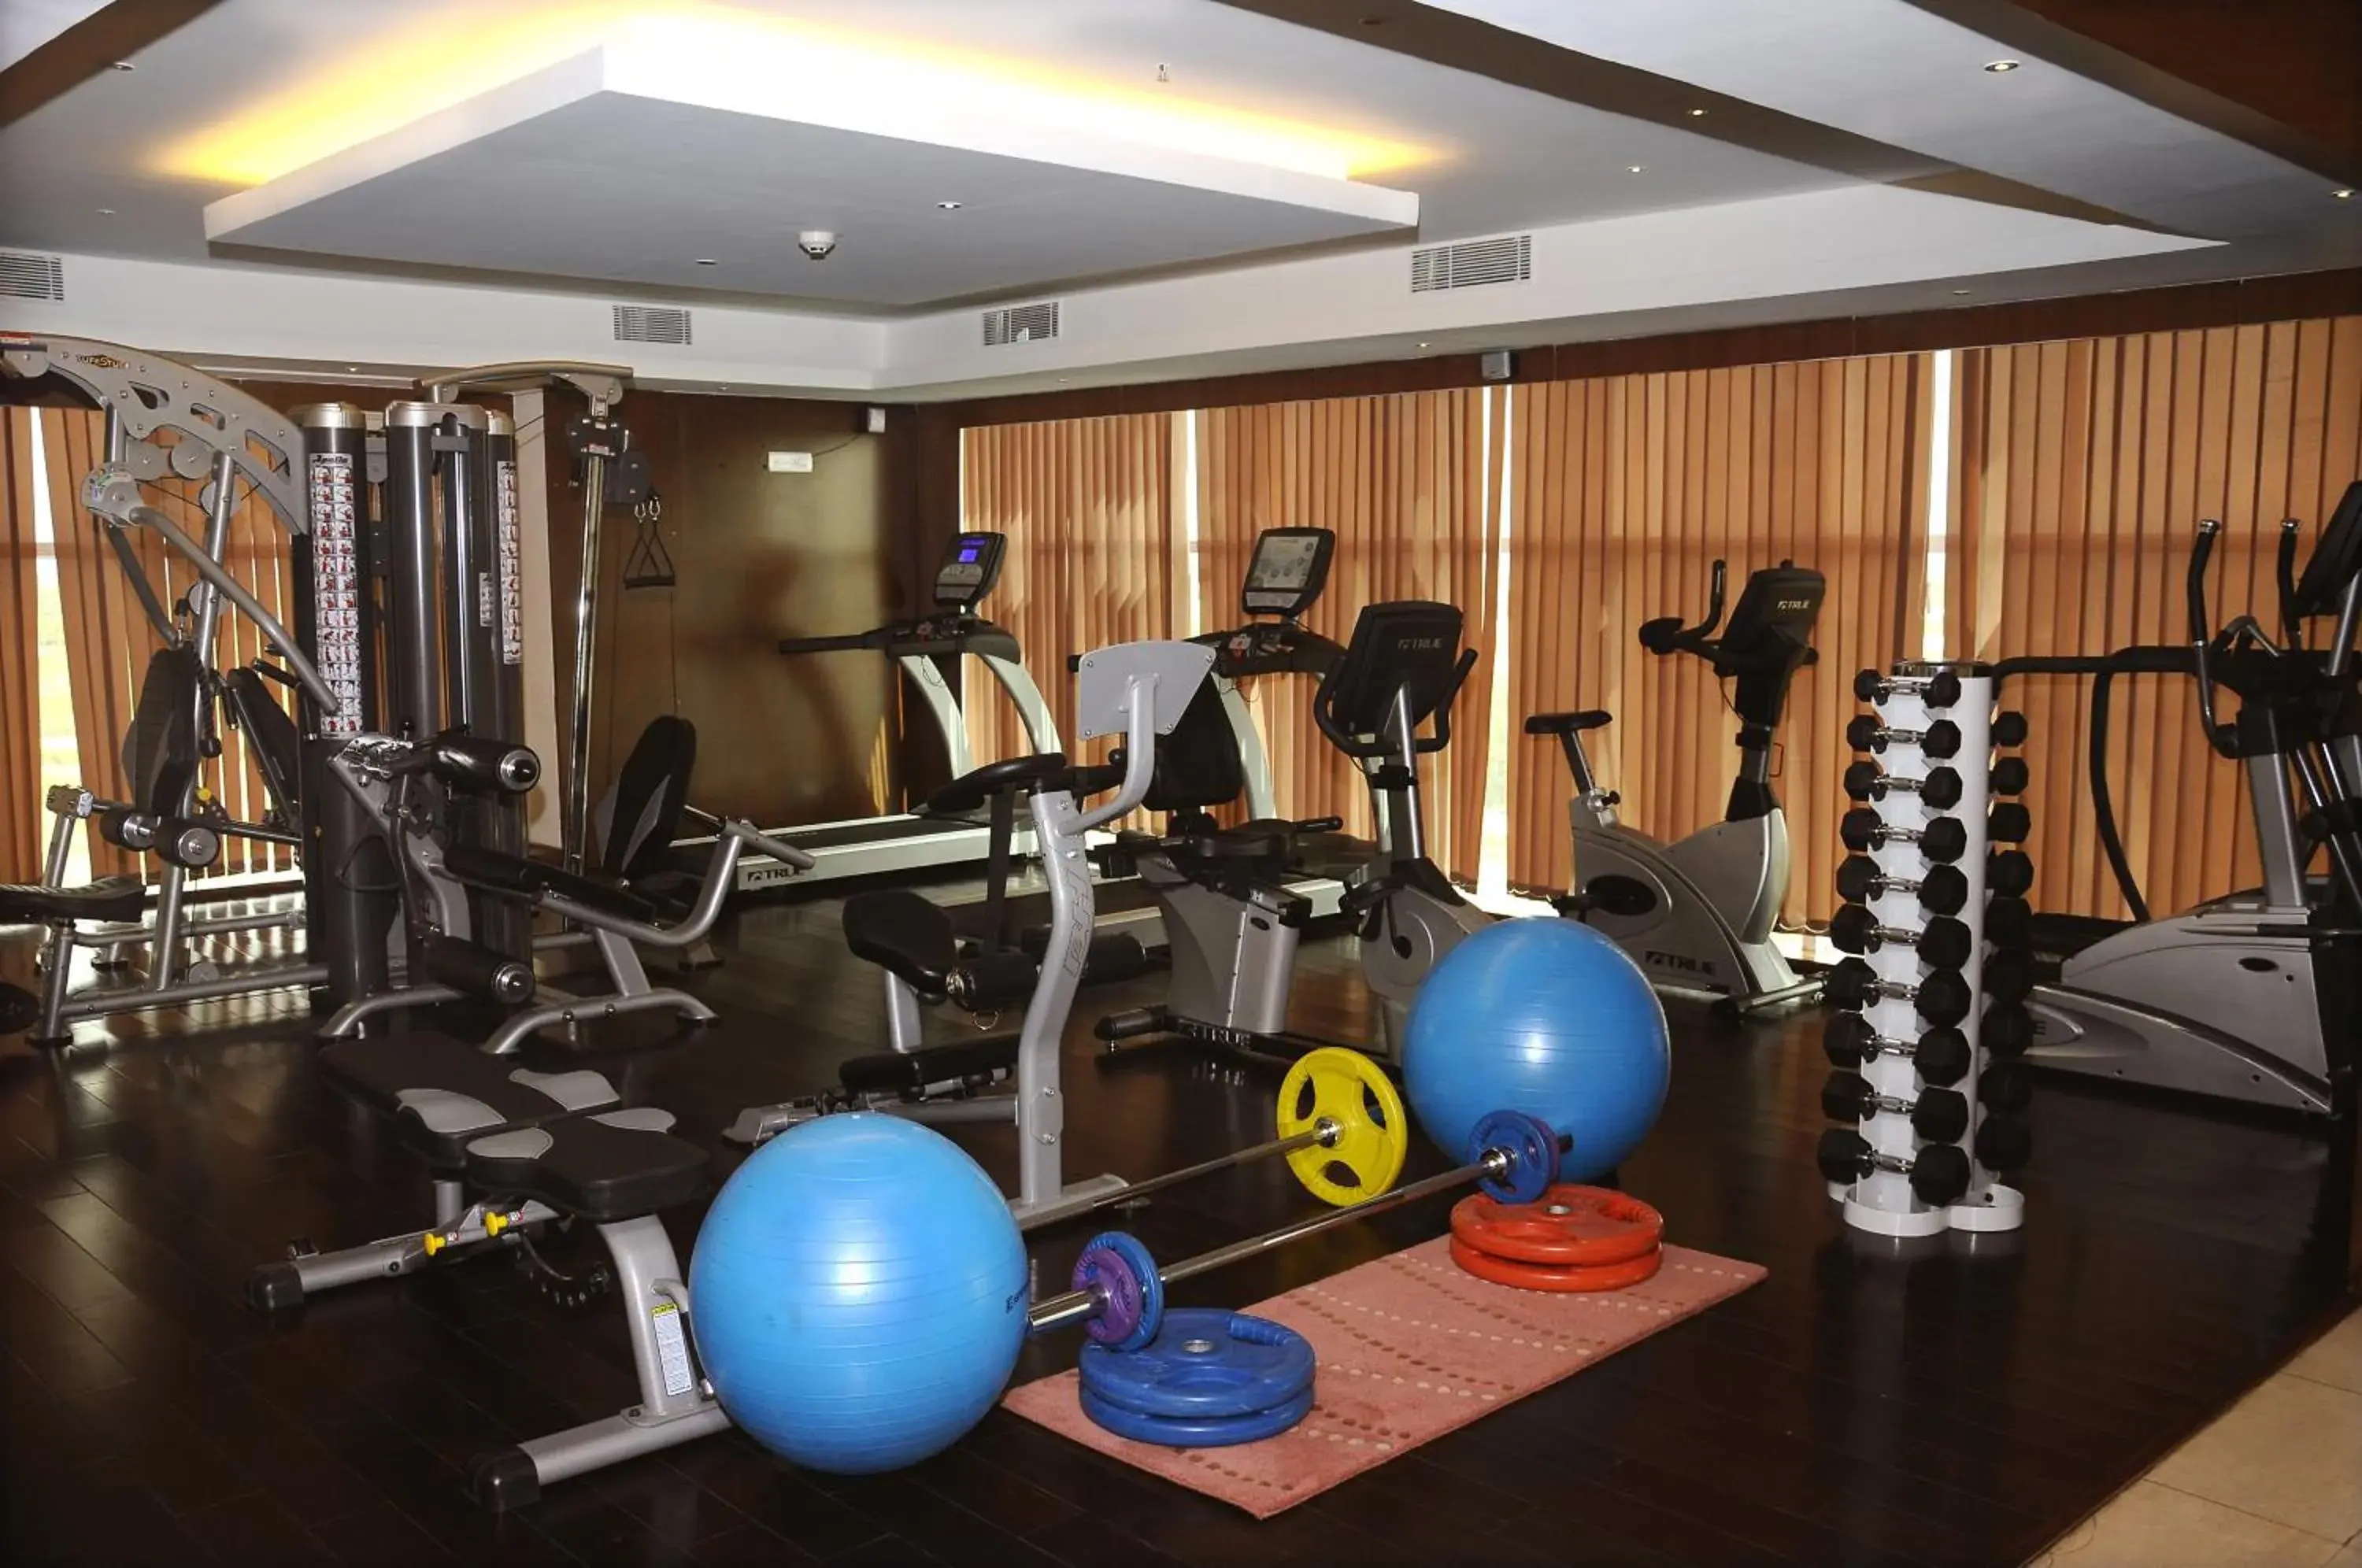 Fitness centre/facilities, Fitness Center/Facilities in Hotel Gokulam Park - Coimbatore